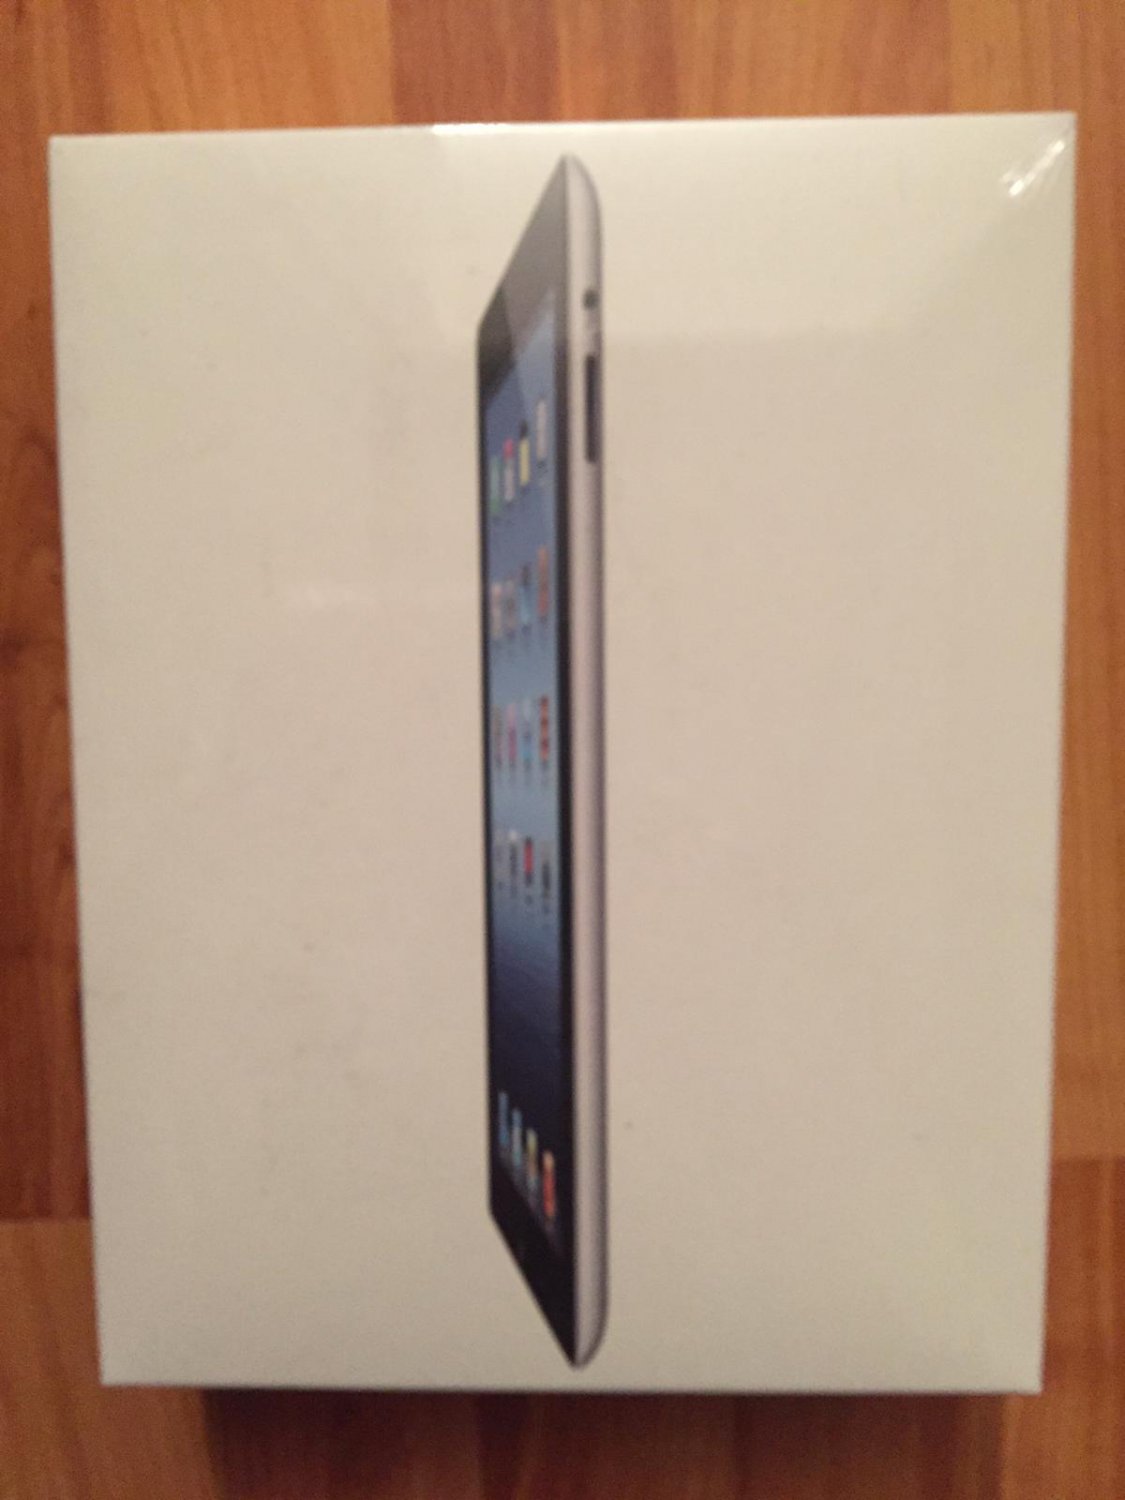 Apple iPad 3 A1416 32gb wifi factory sealed